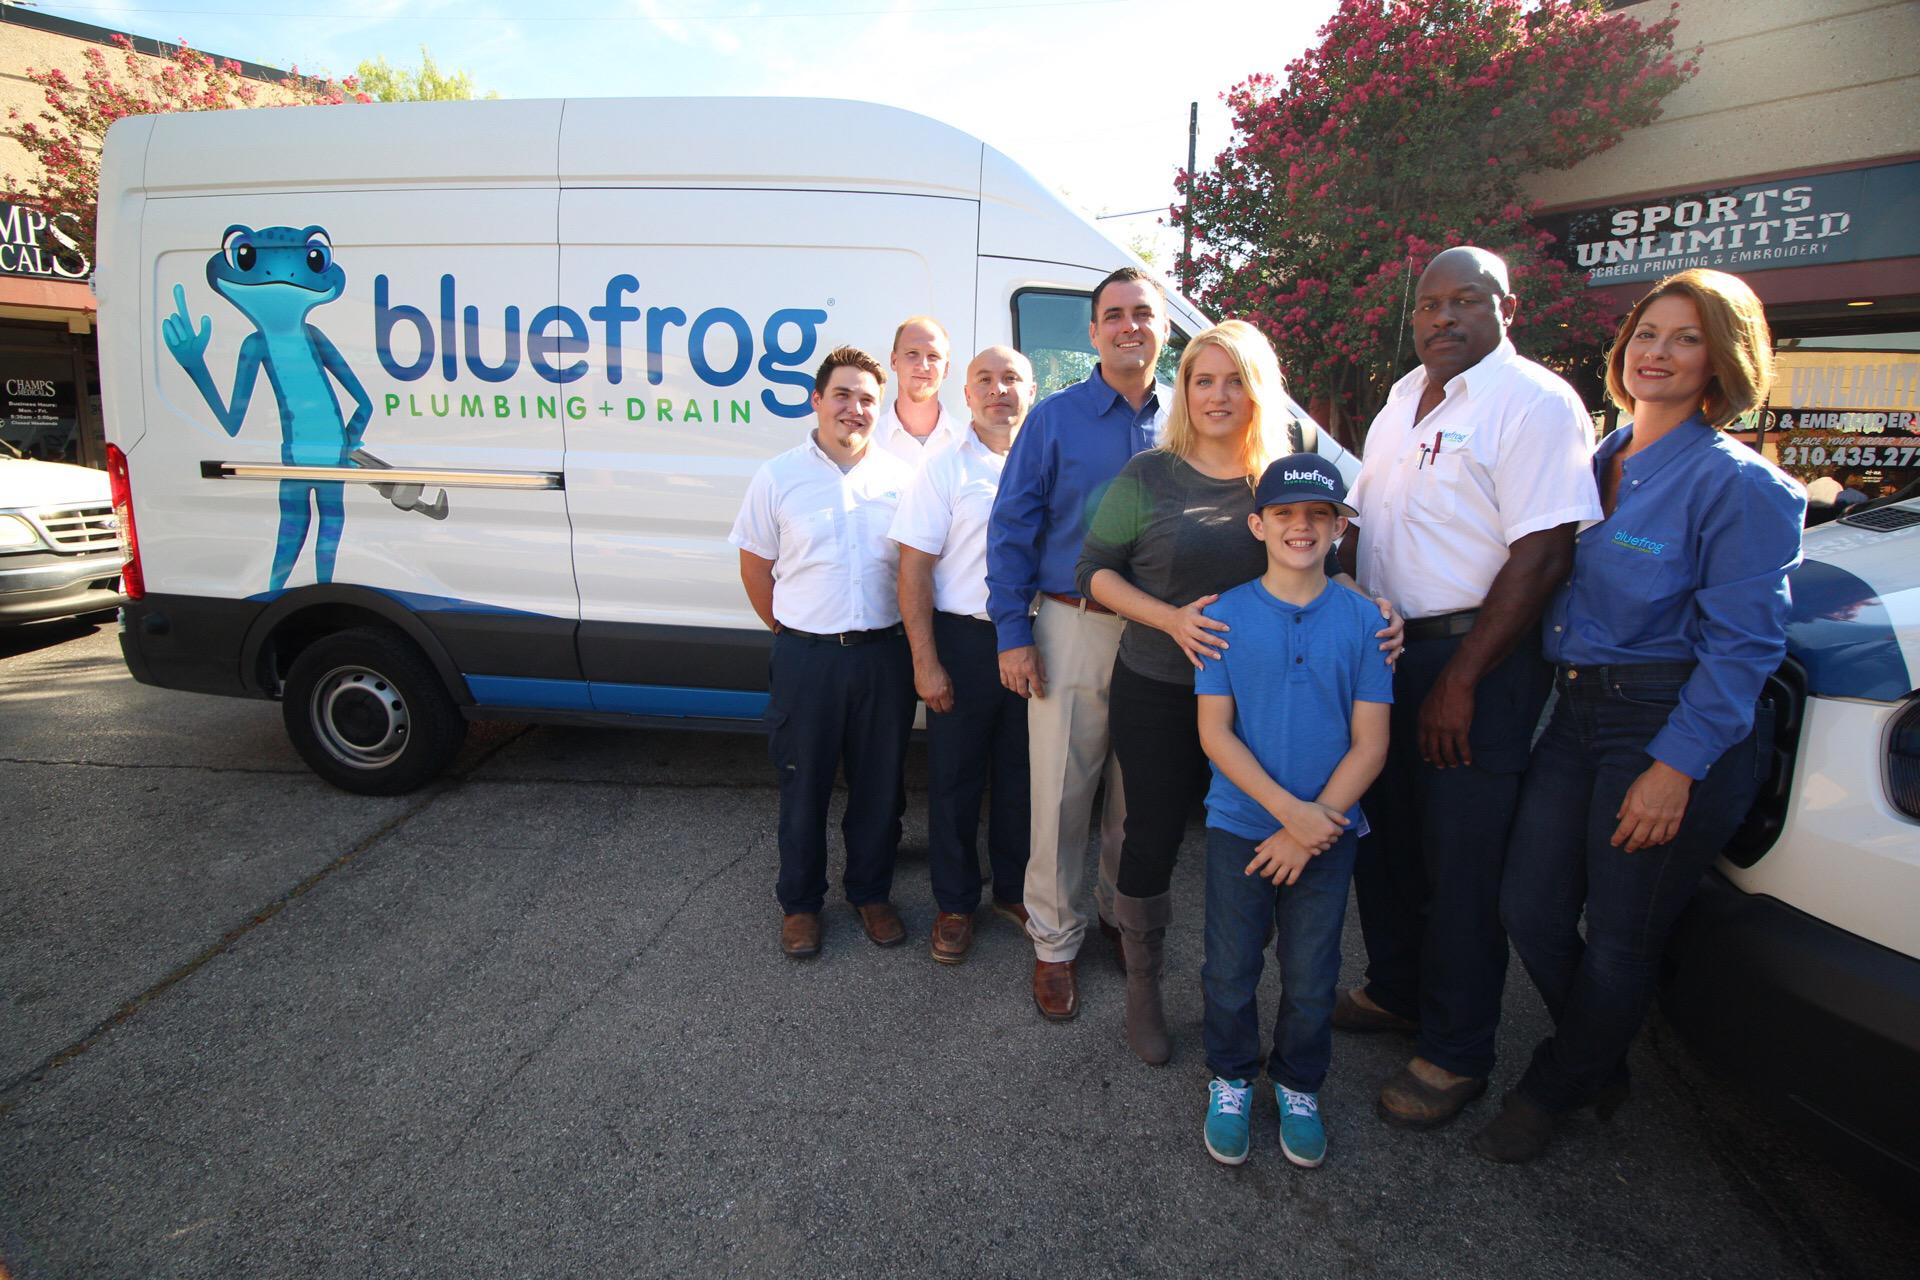 The bluefrog Plumbing + Drain of San Antonio in front of a plumbing service truck.